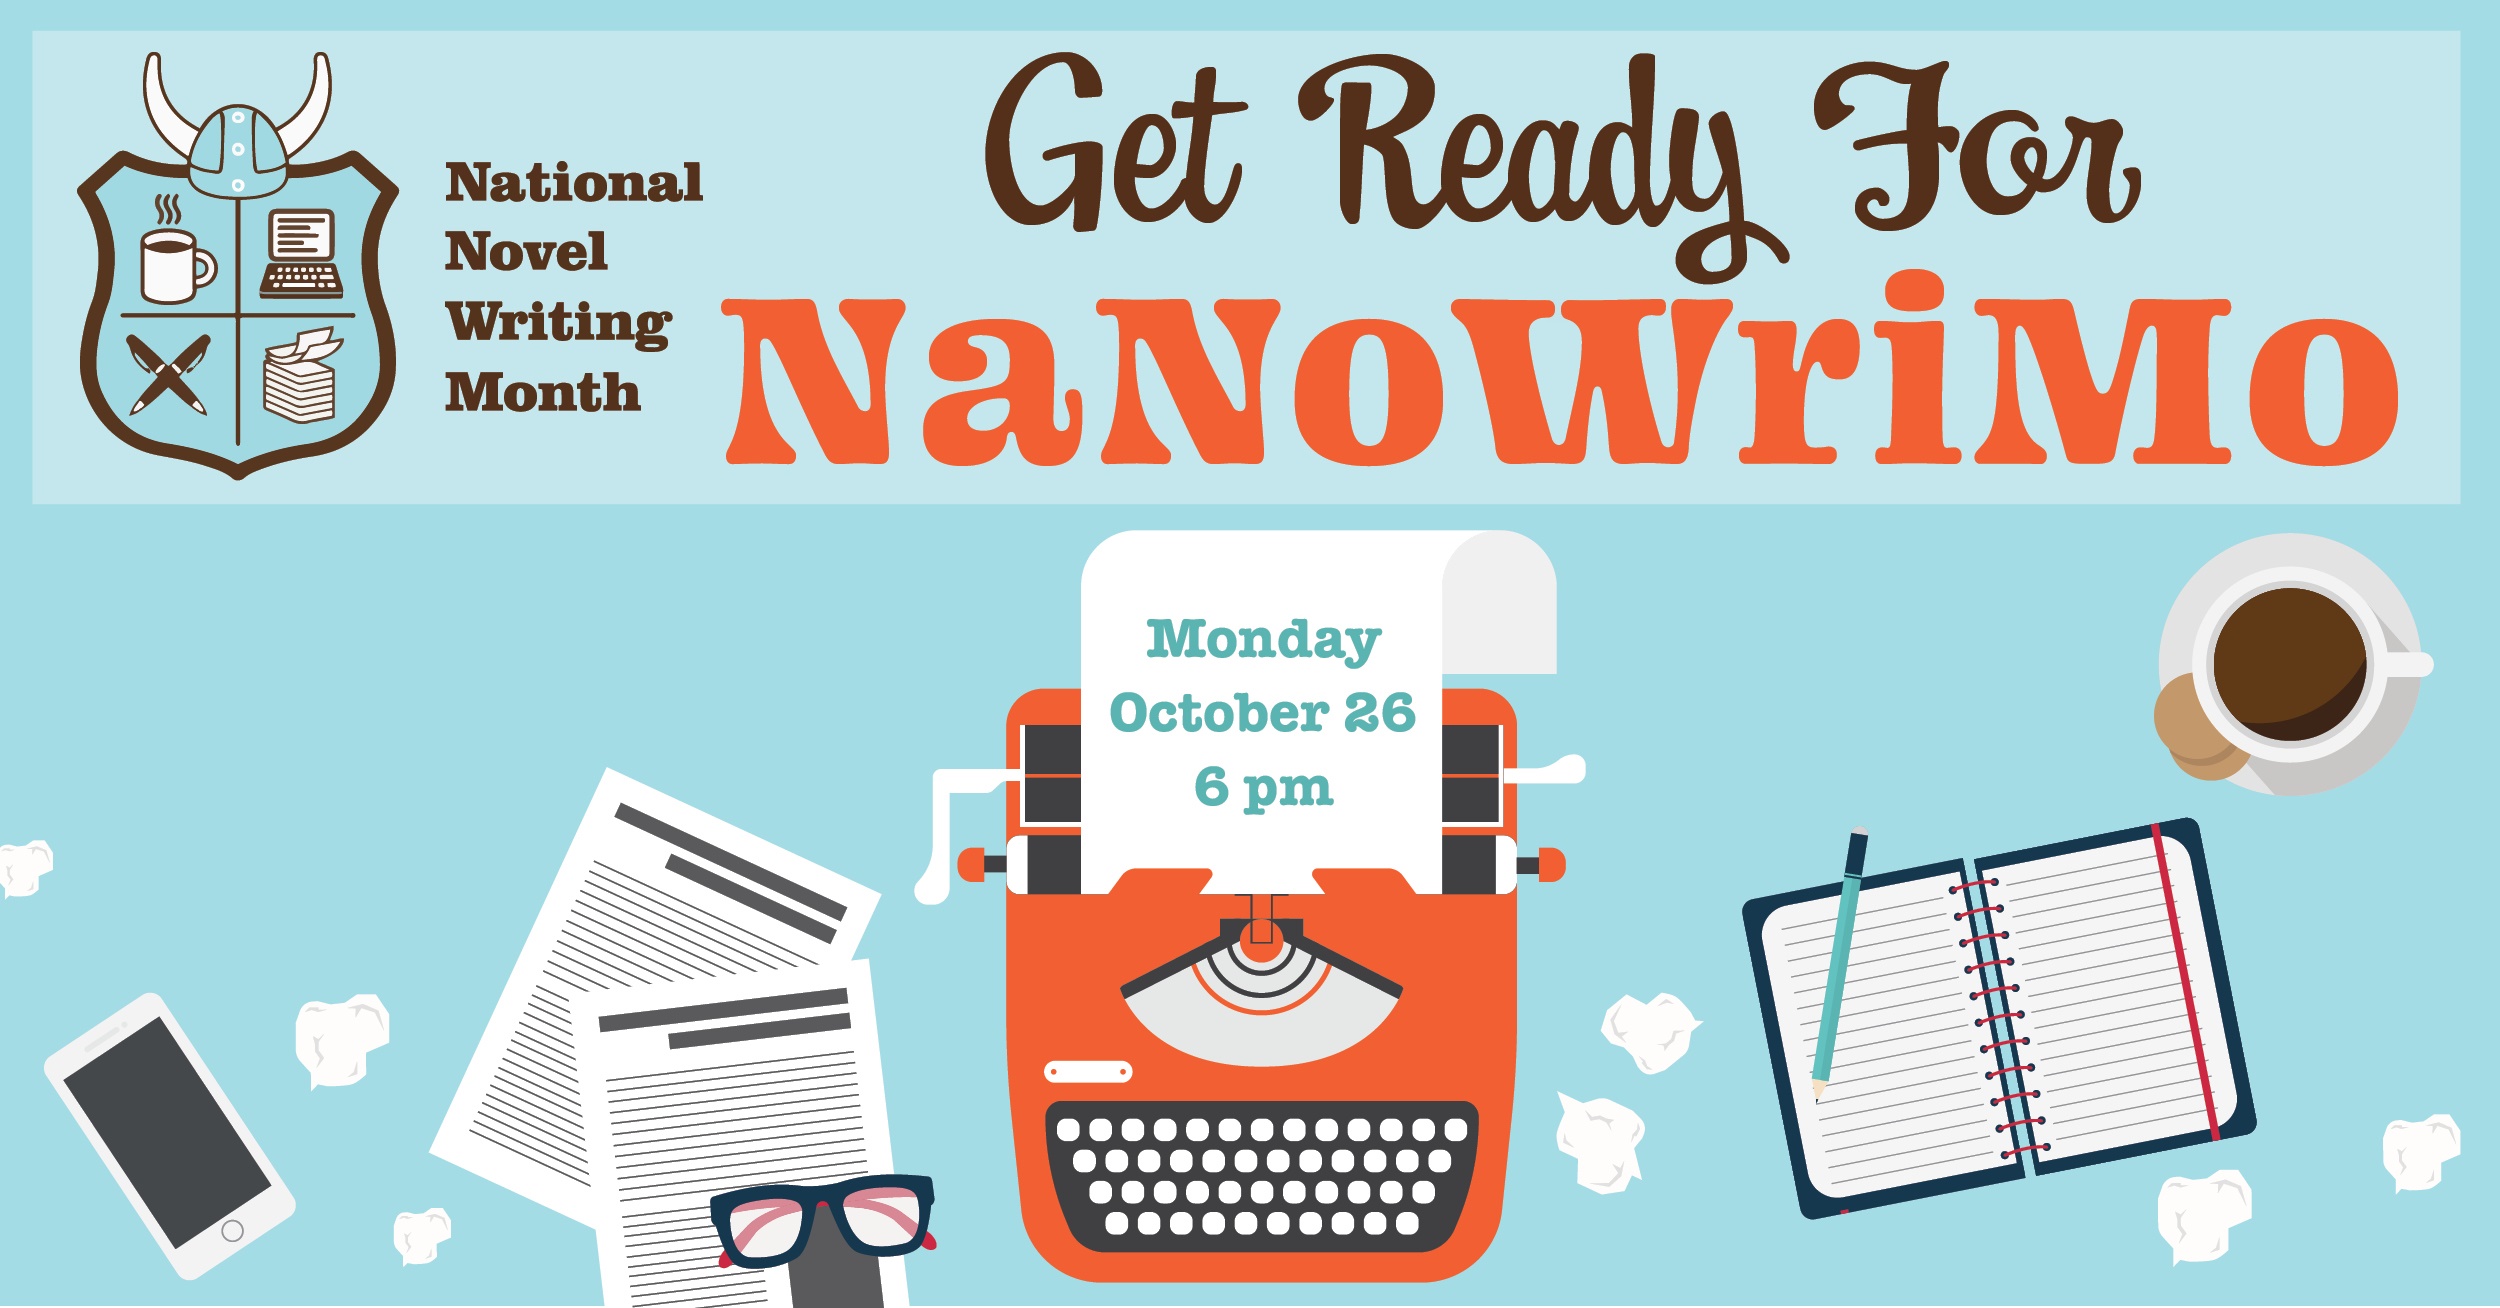 Get Ready For NaNoWriMo banner with orange typewriter